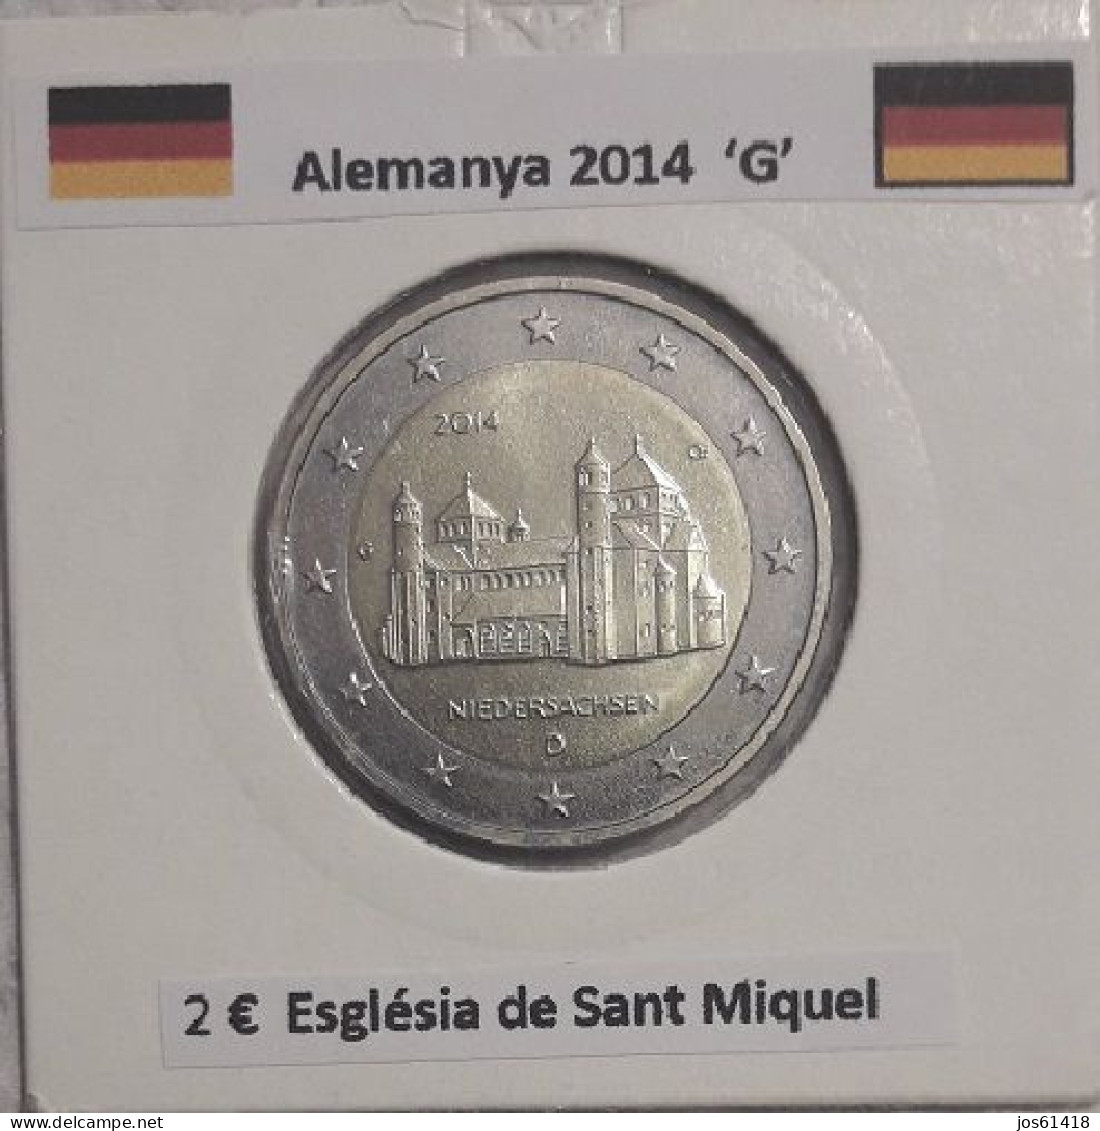 2 Euros Alemania / Germany  2014 Niedersachsen  D,G O J Sin Circular - Germania